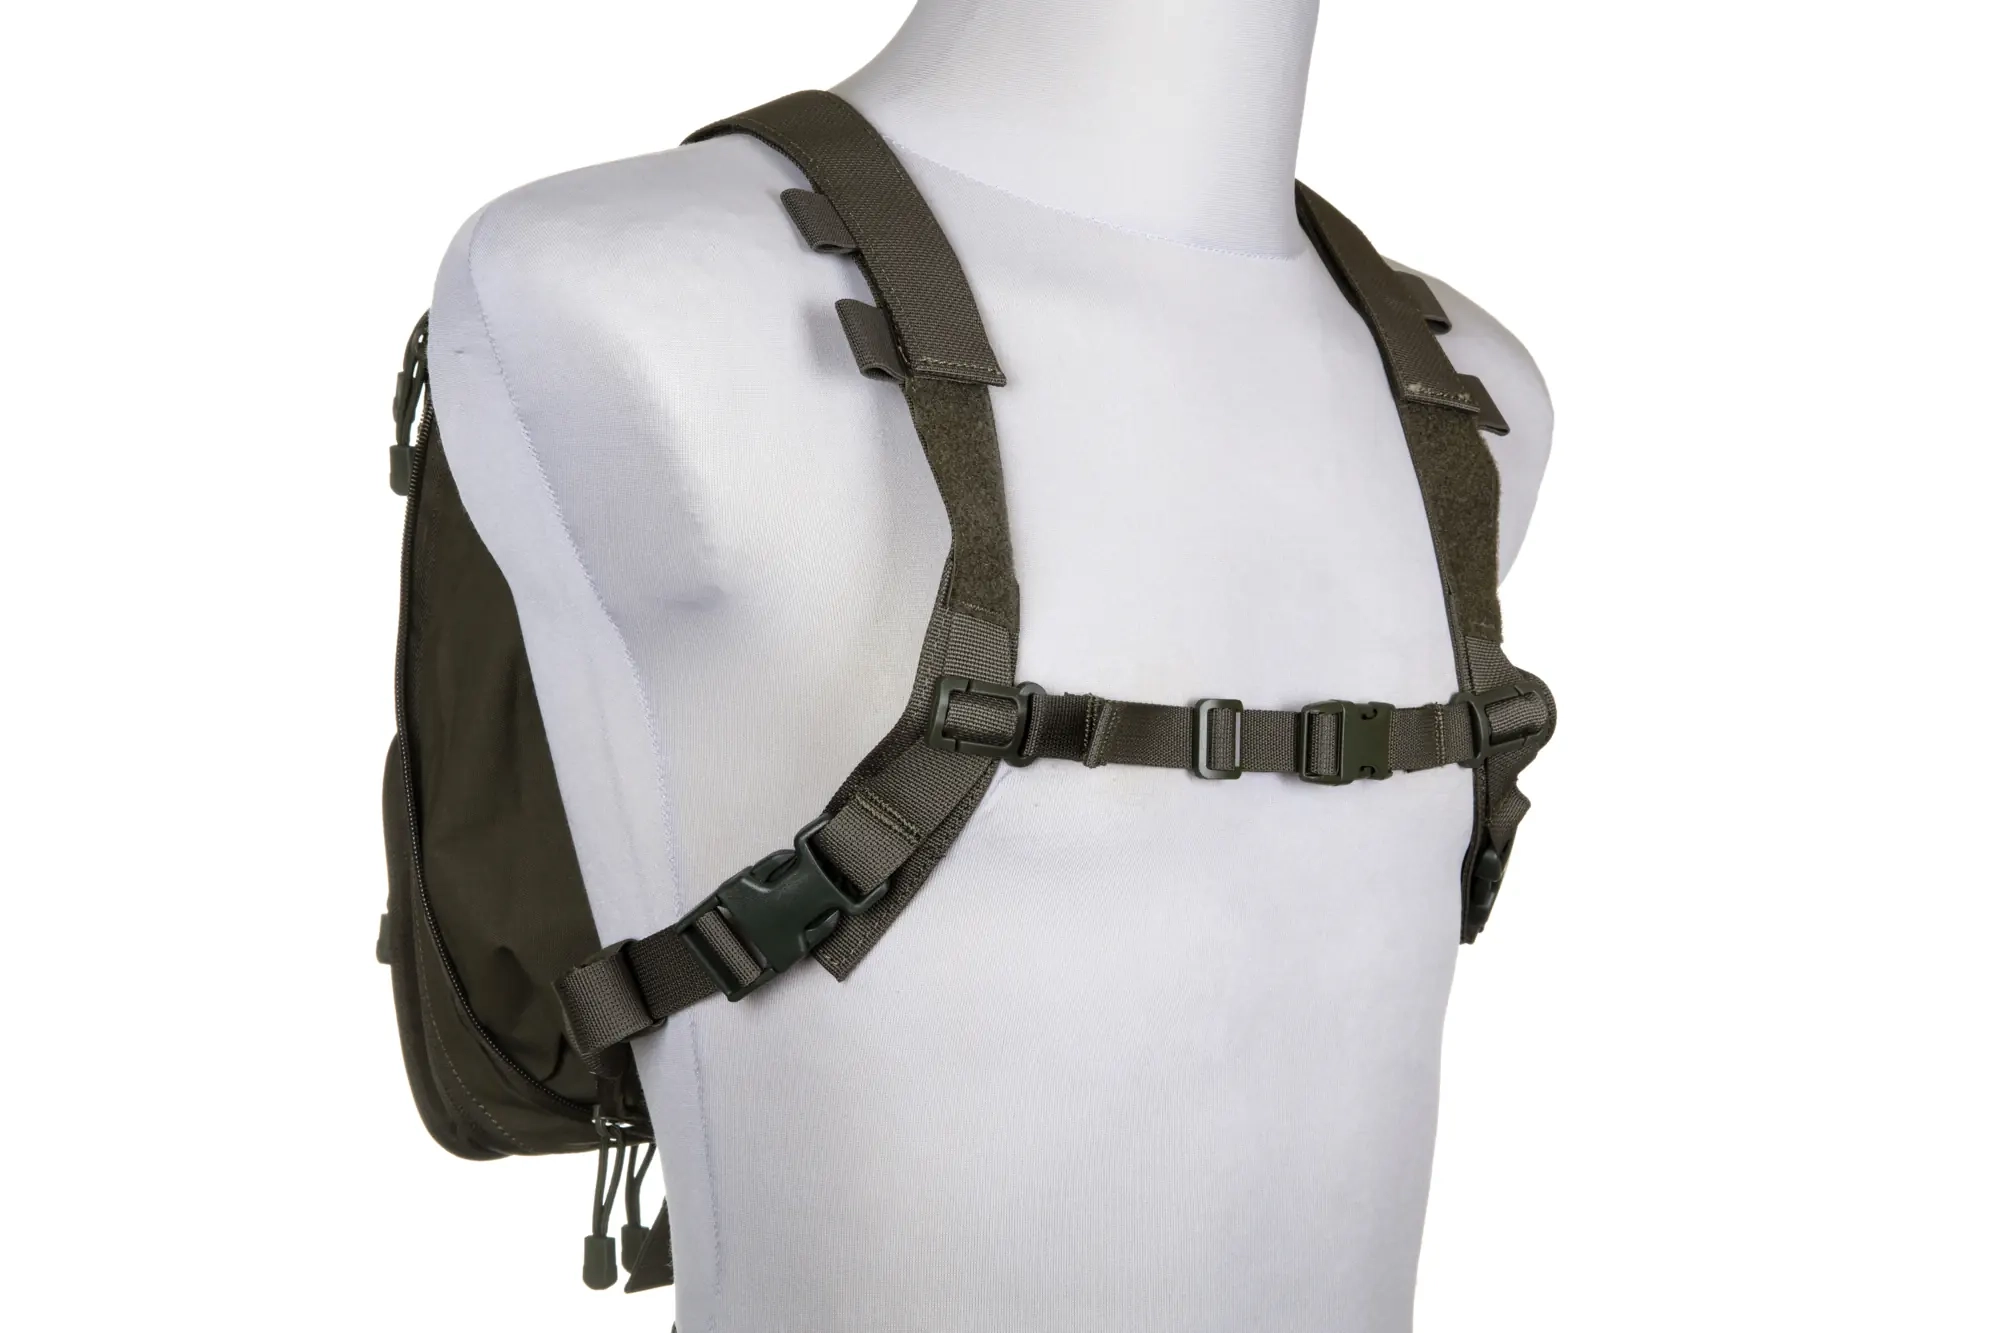 Primal Gear Plesio Mini Map Backpack - Ranger Green